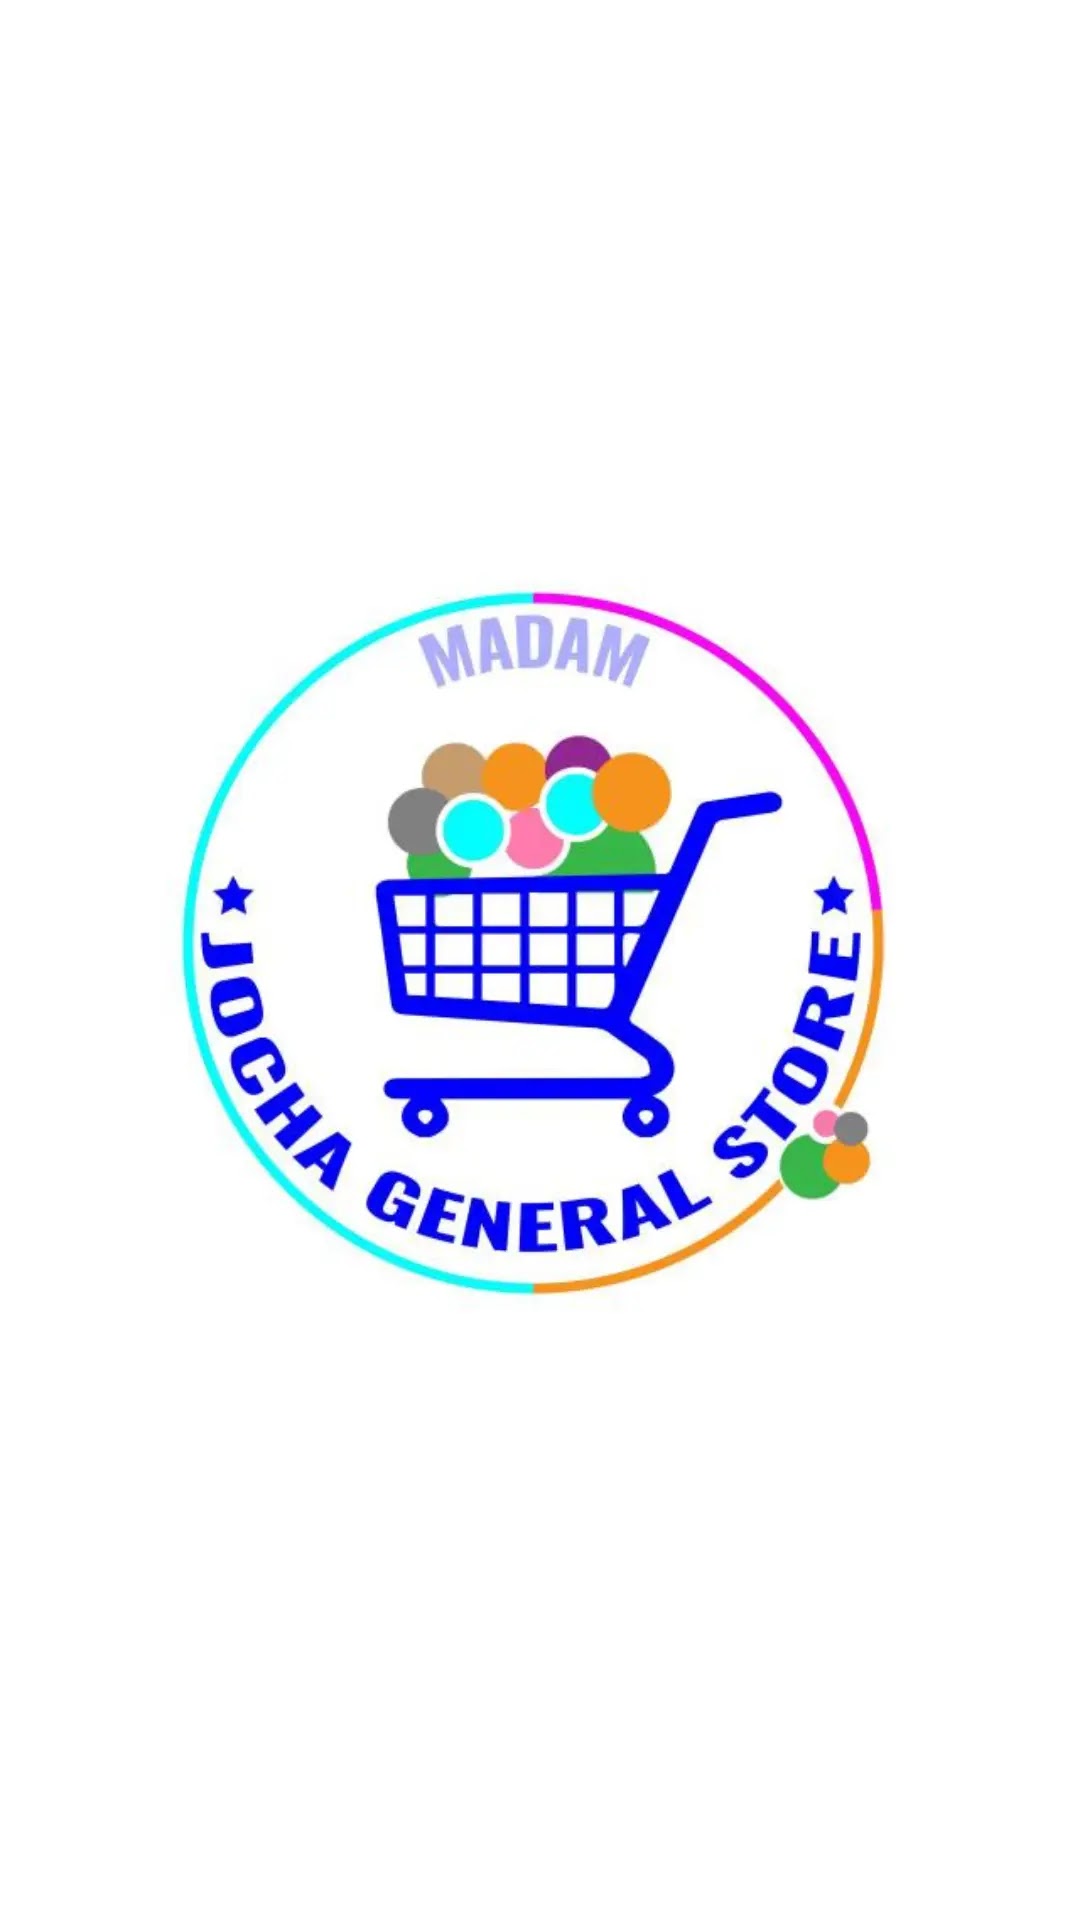 Madam Jocha General Store